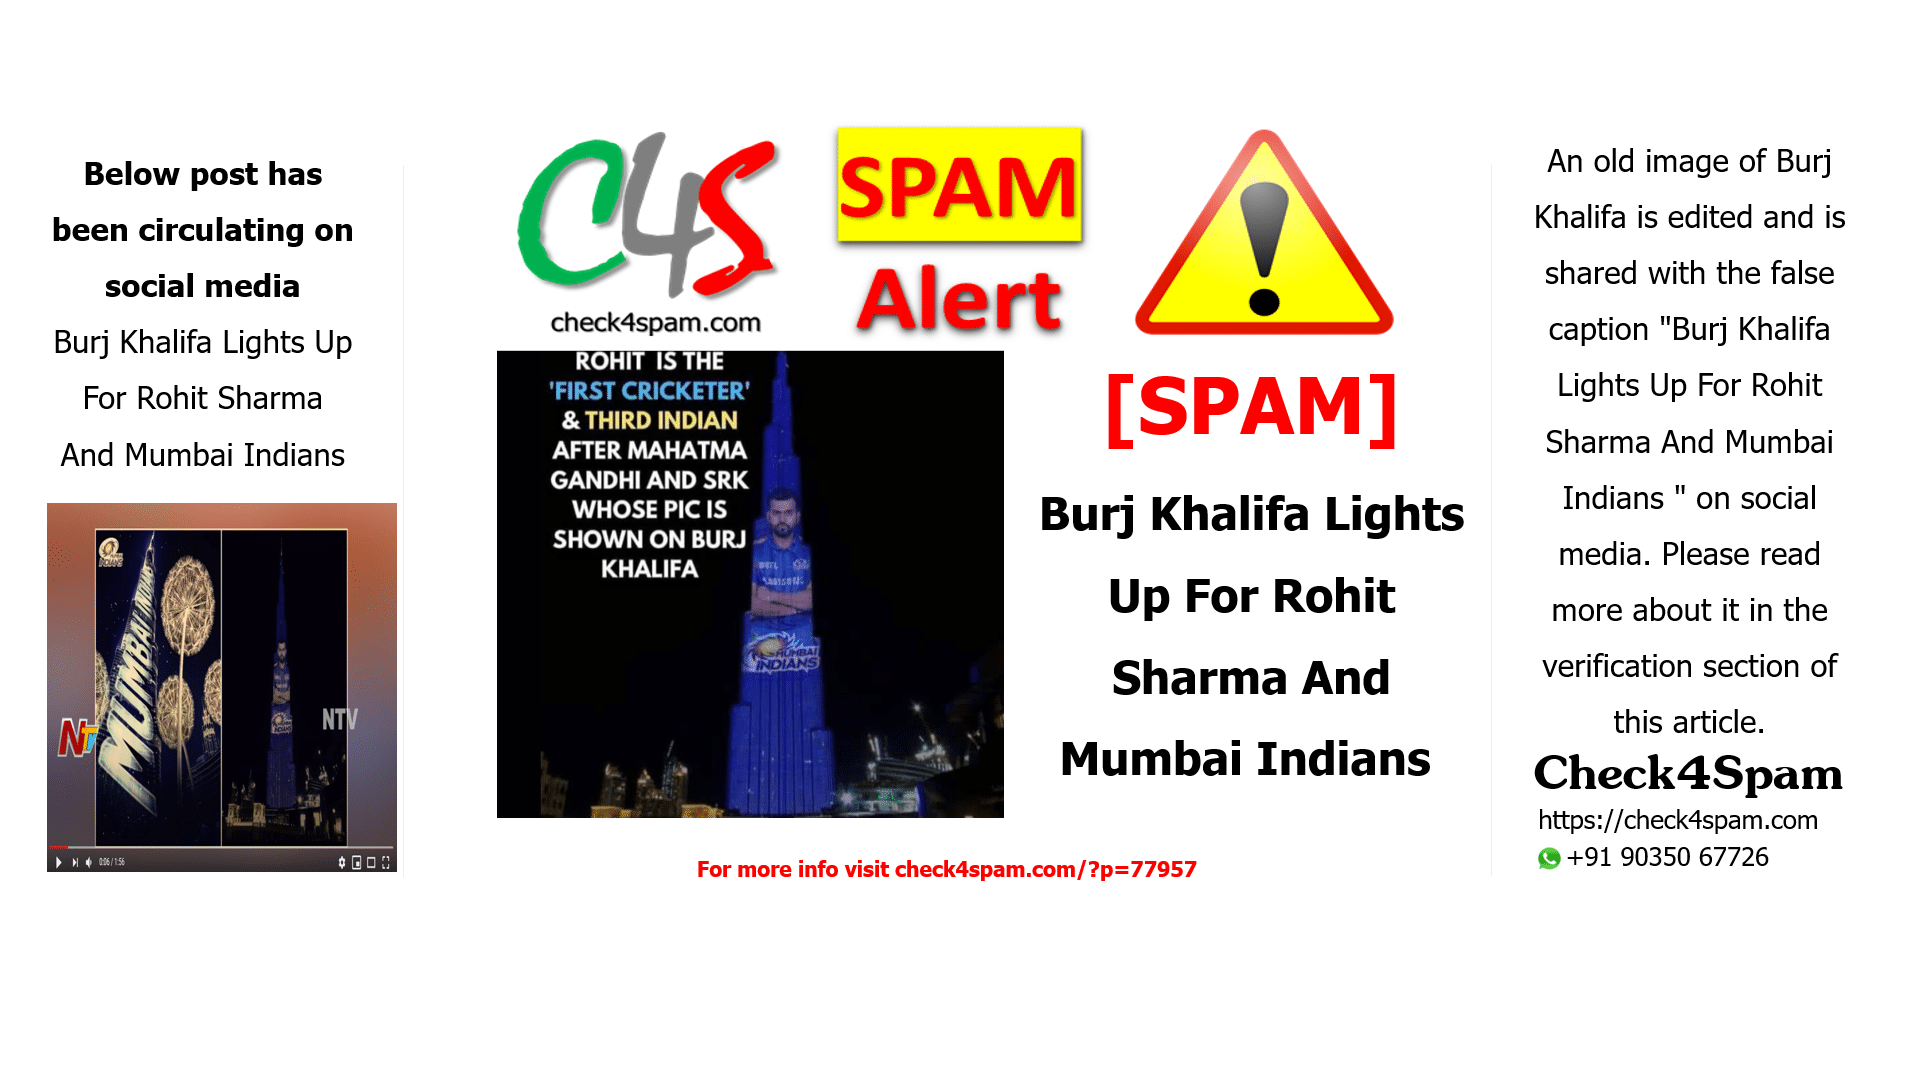 Burj Khalifa Lights Up For Rohit Sharma And Mumbai Indians